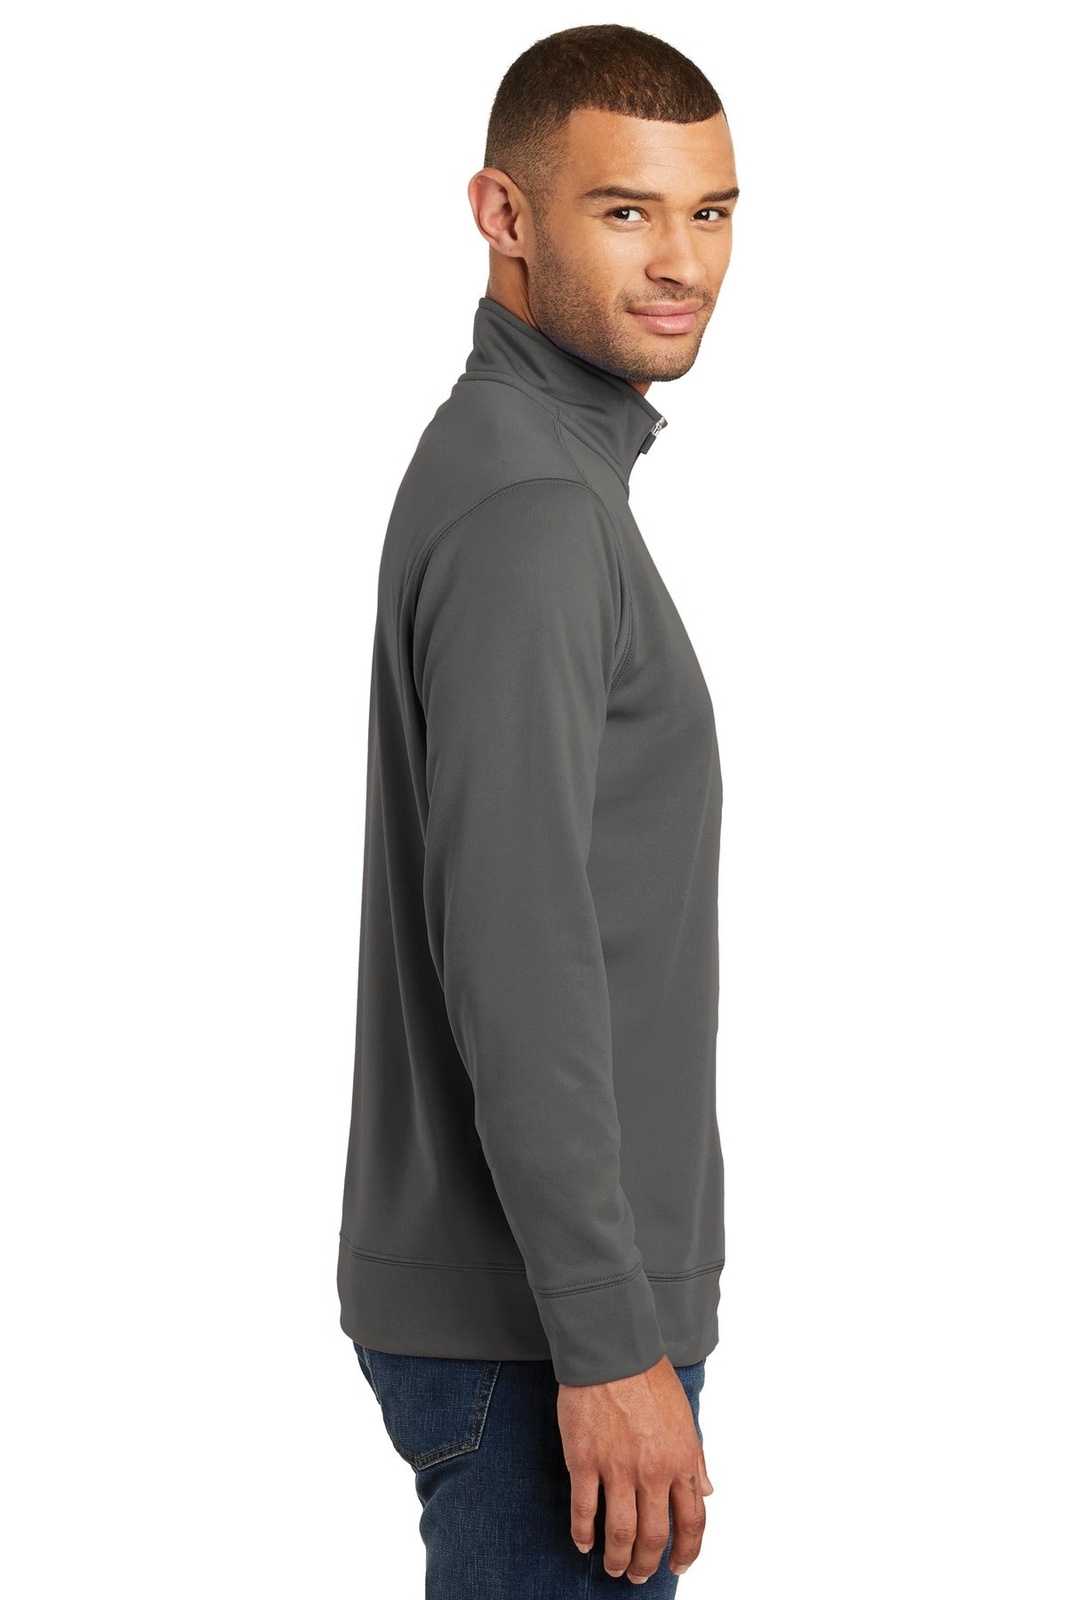 Port &amp; Company PC590Q Fleece 1/4-Zip Pullover Sweatshirt - Charcoal - HIT a Double - 3